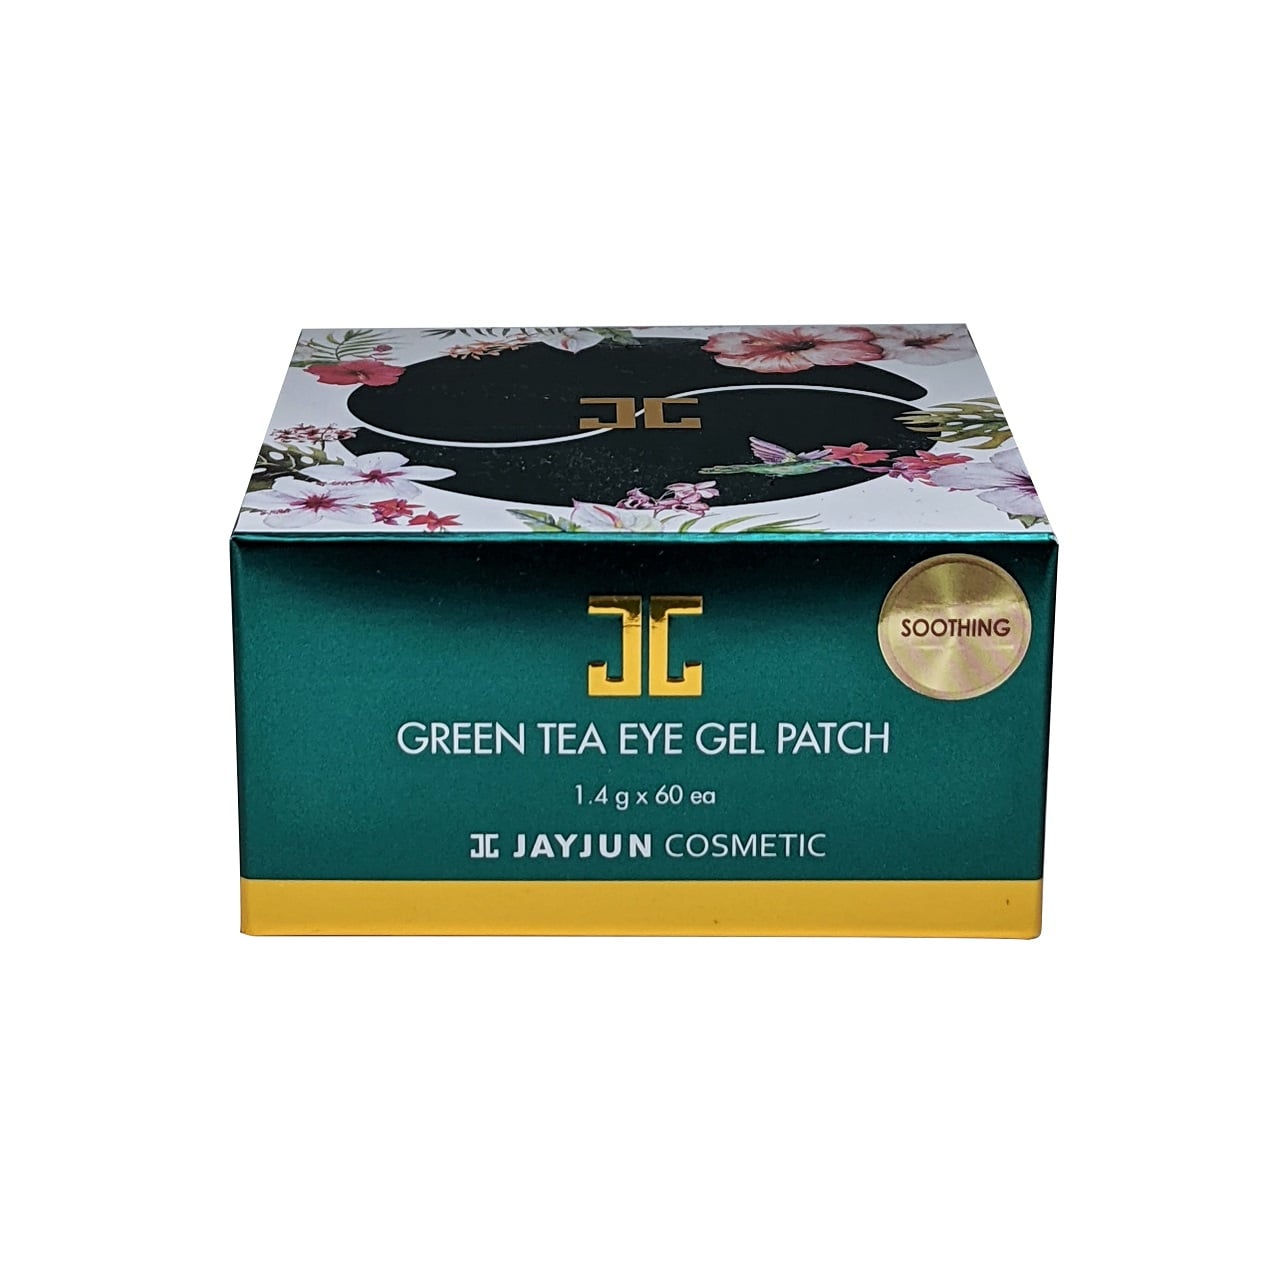 Product label for Jayjun Green Tea Eye Gel Patch